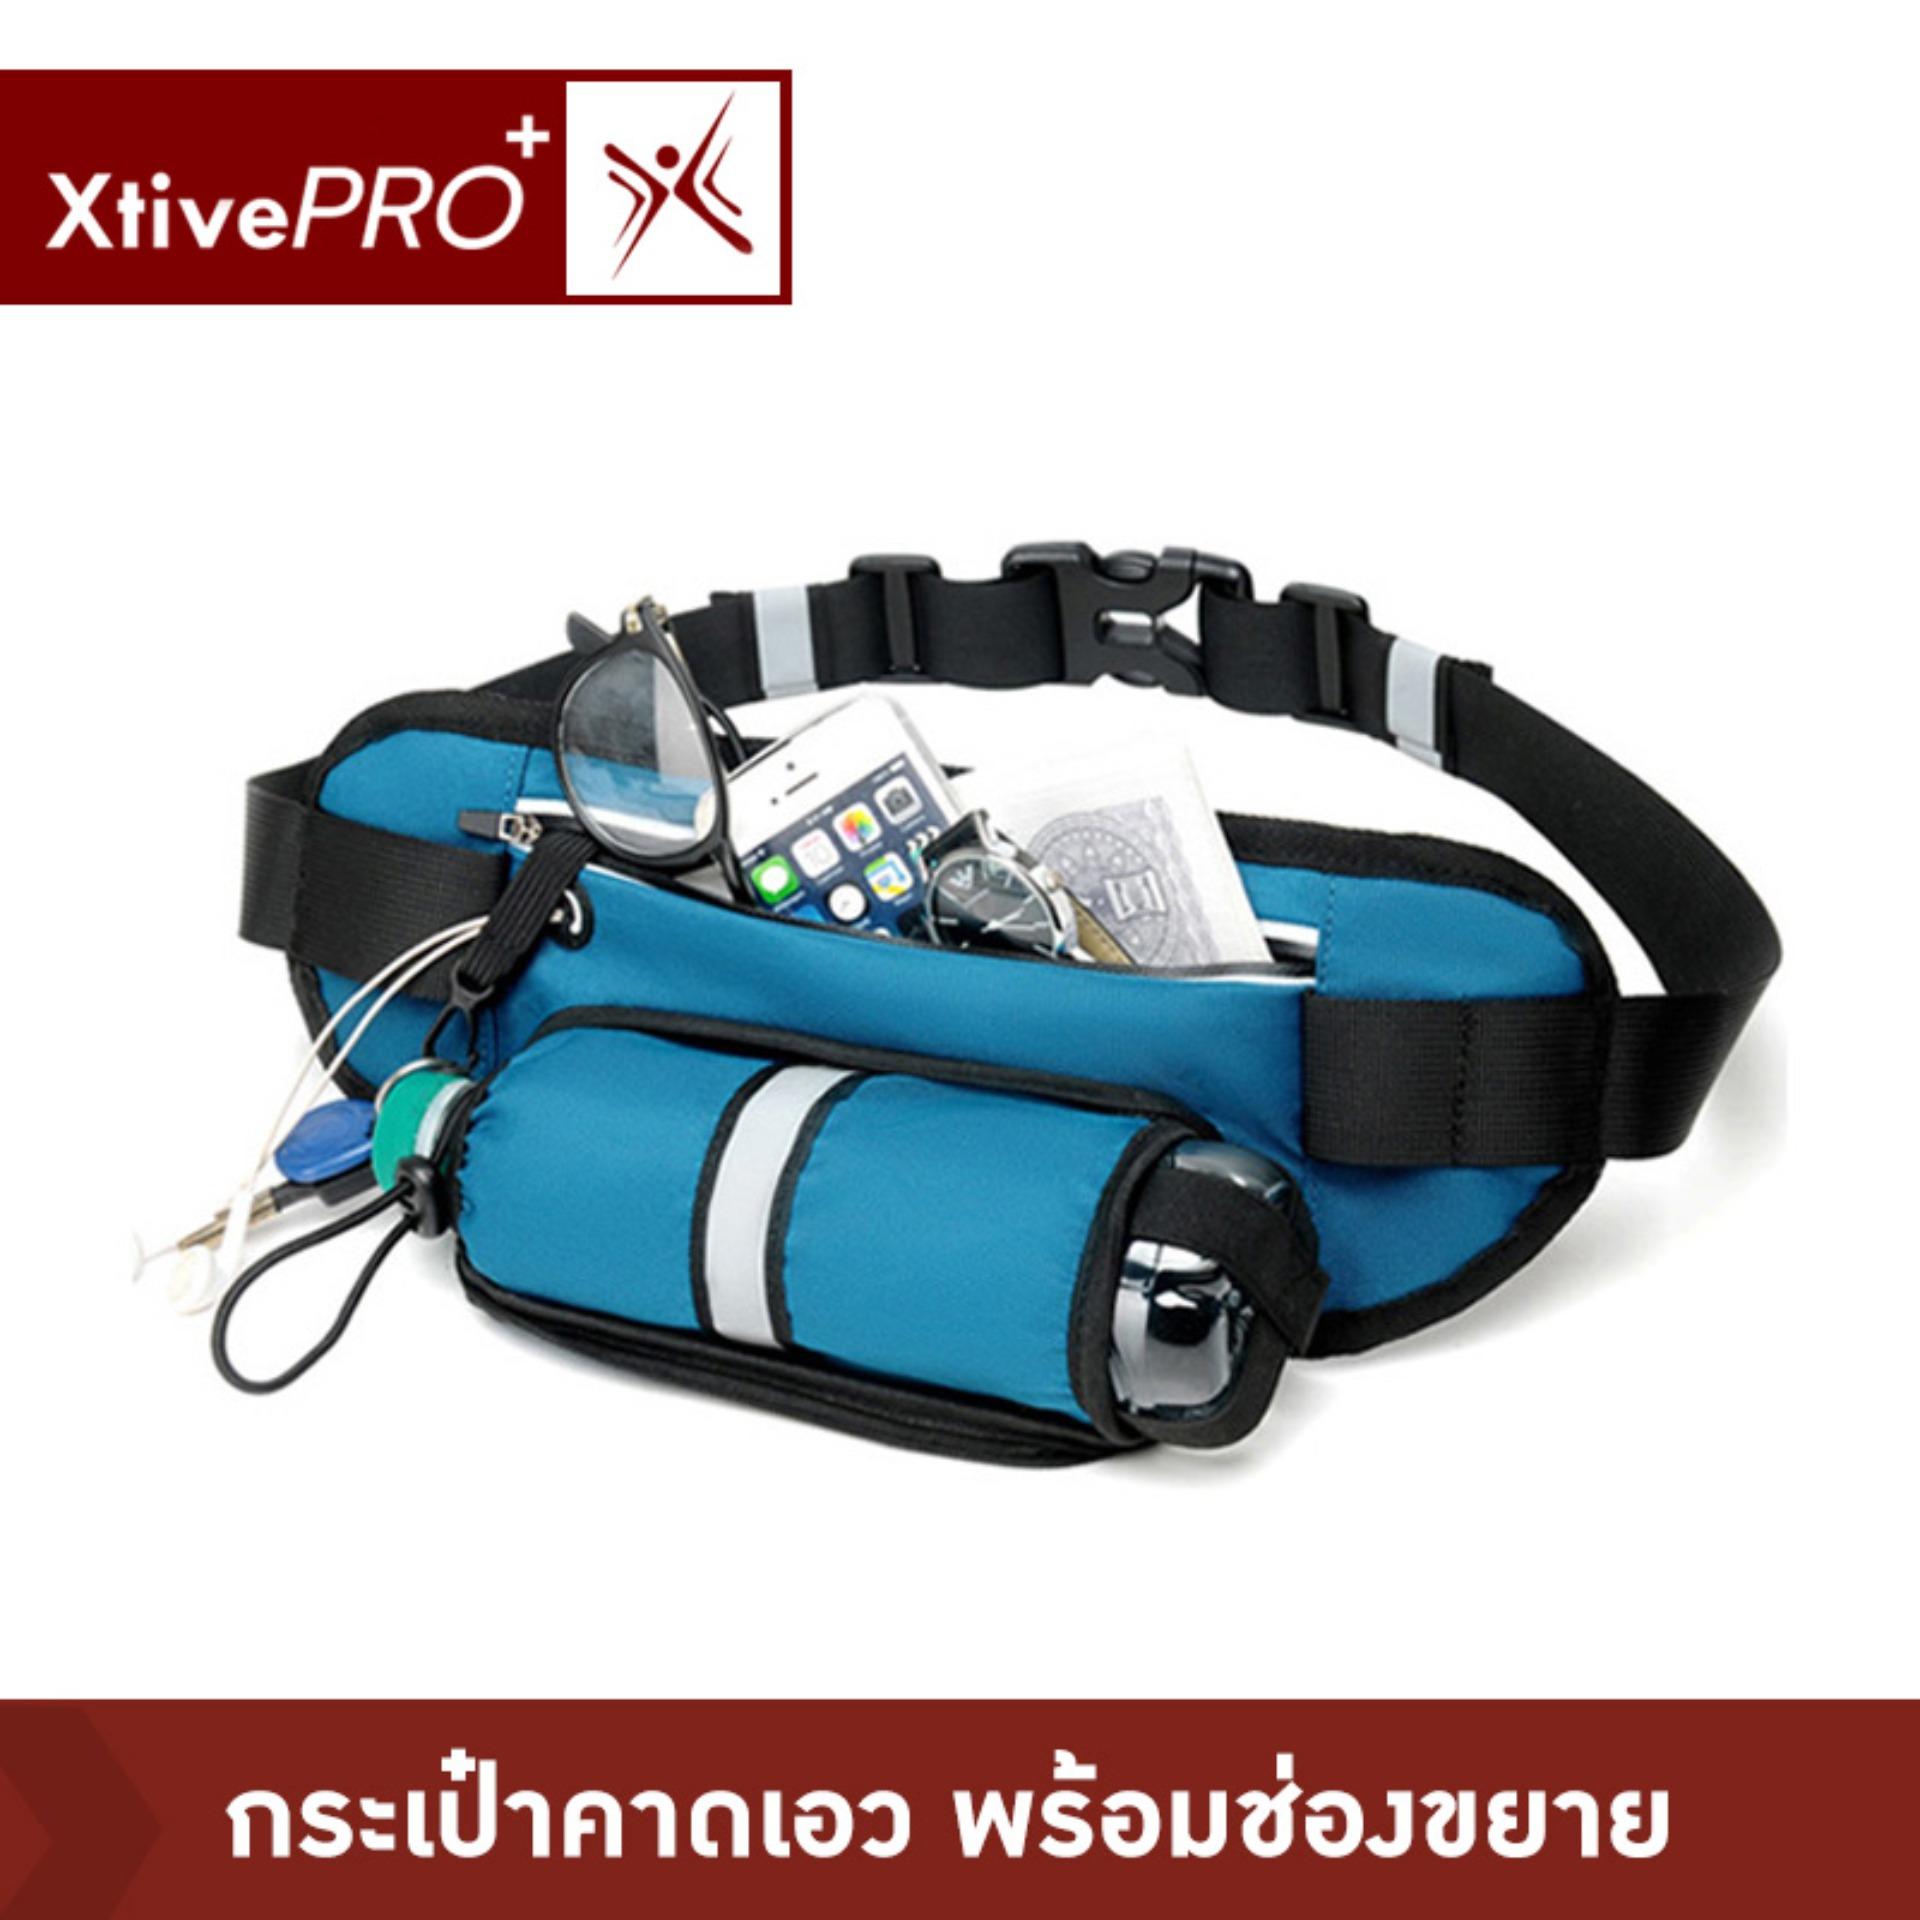 XtivePro Sport Running Belt with Water Expandable Pocket กระเป๋ากีฬาแบบคาดเอว พร้อมช่องขยาย กระเป๋าคาดเอว กระเป๋าวิ่ง กระเป๋าออกกำลังกาย กระเป๋ากีฬา กันน้ำ Running Belt Running pocket